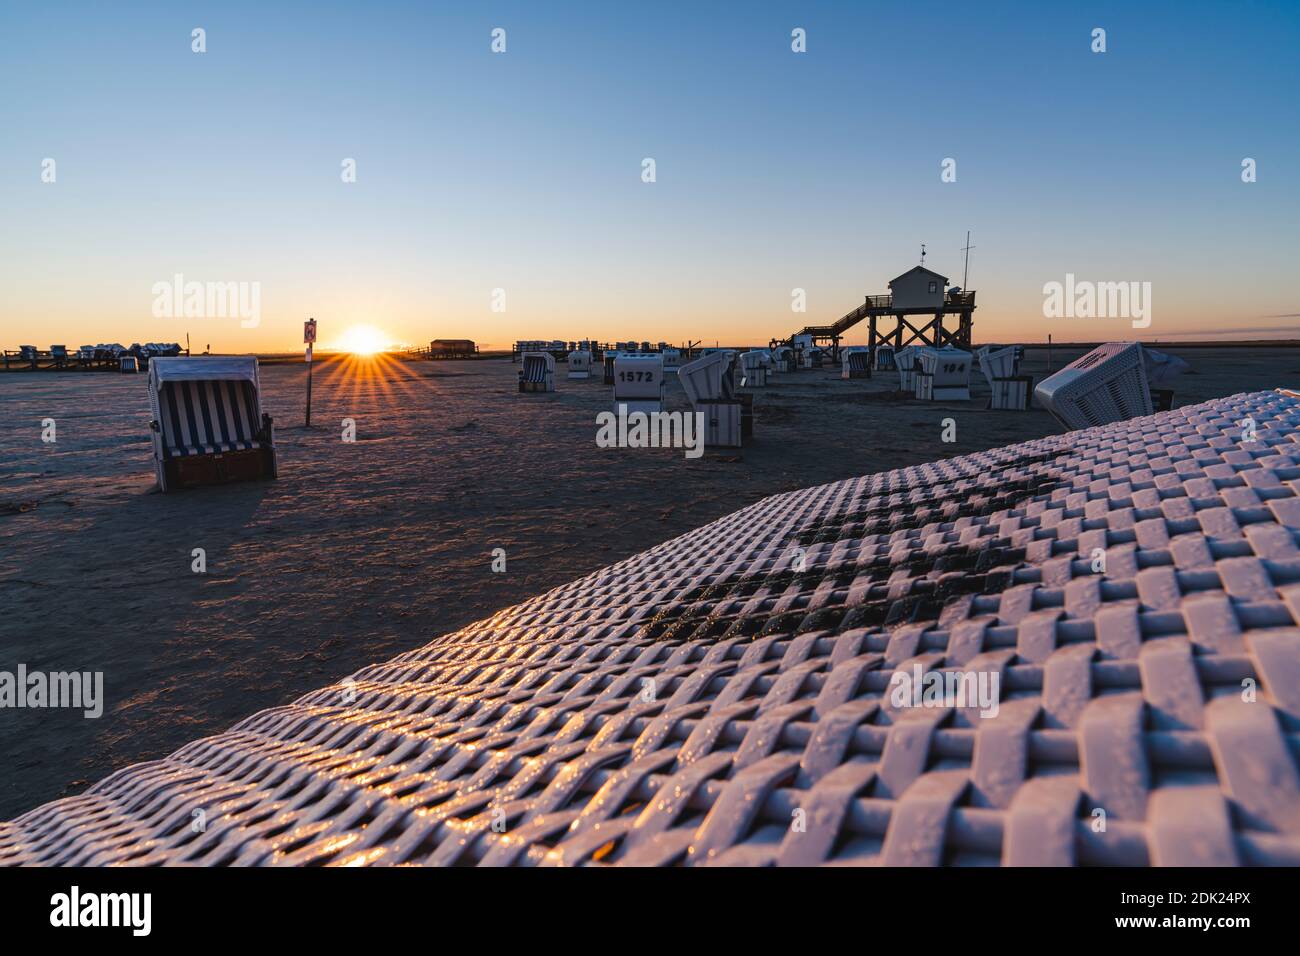 Plage, chaises de plage, pieu, lever du soleil, Sankt Peter-Ording, Mer du Nord, Schleswig-Holstein, Allemagne, Europe Banque D'Images